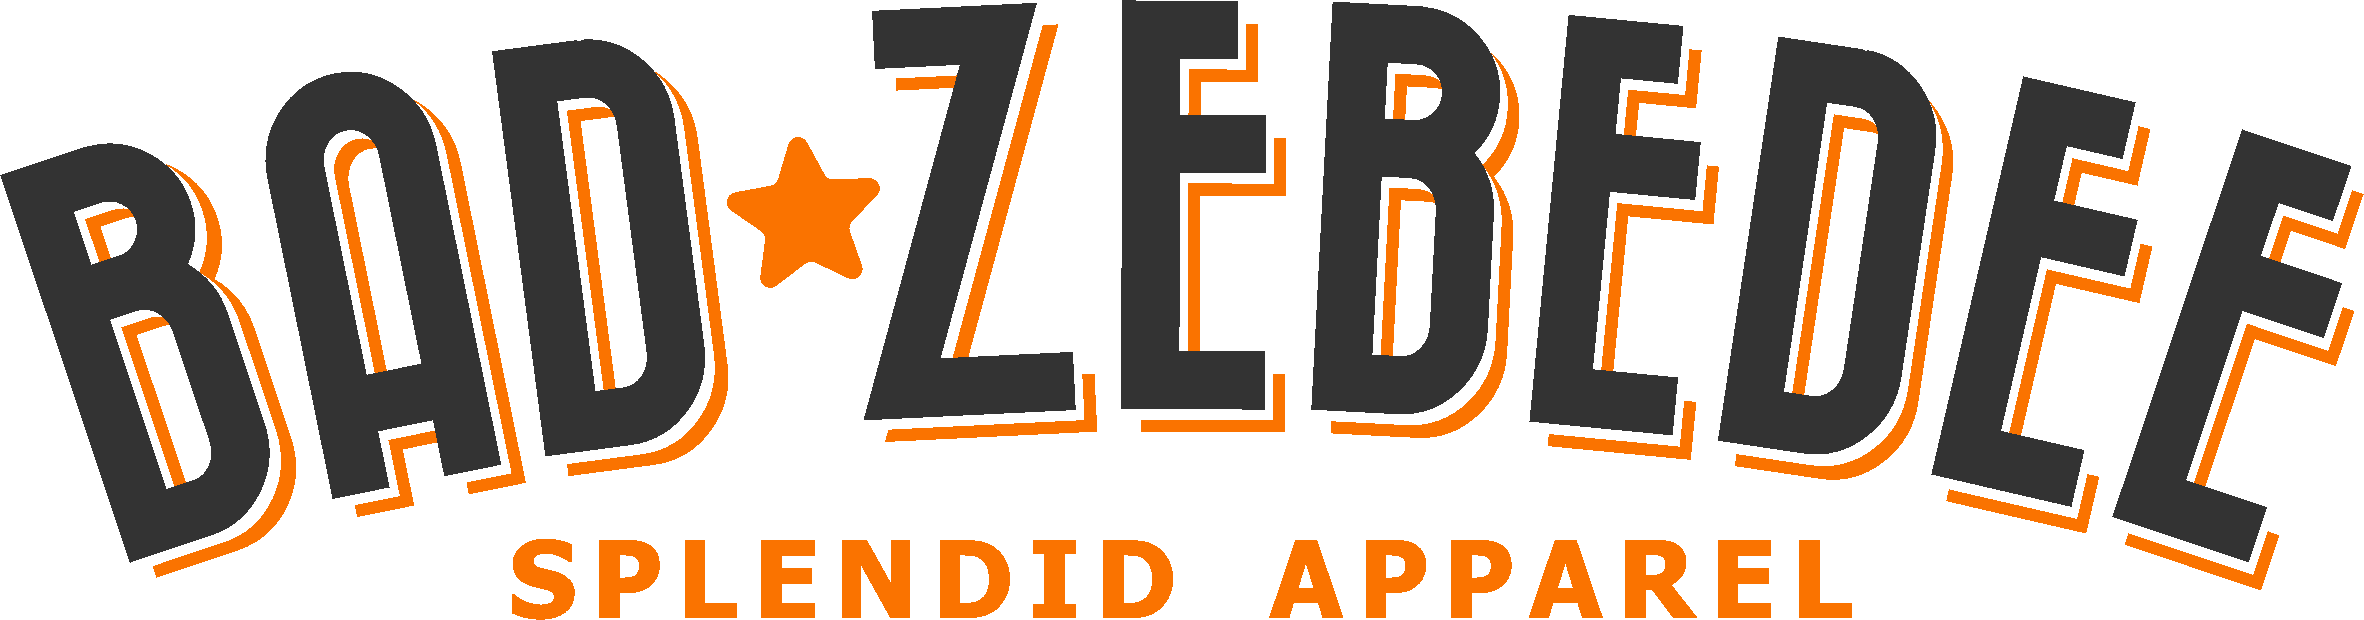 Bad Zebedee logo